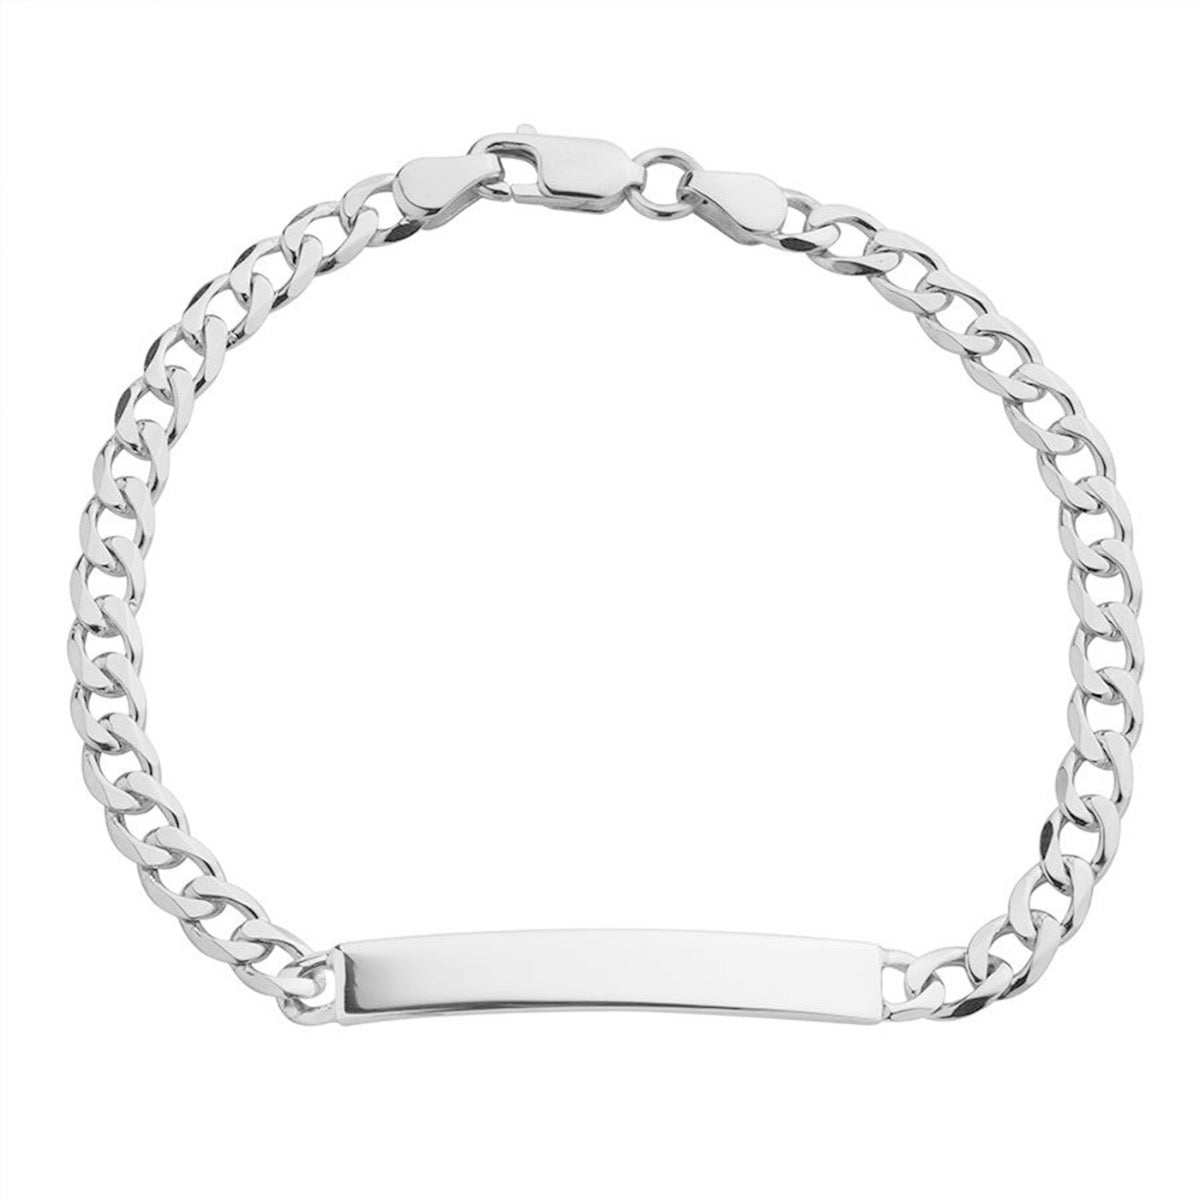 Men's Silver Identity Chain Bracelet